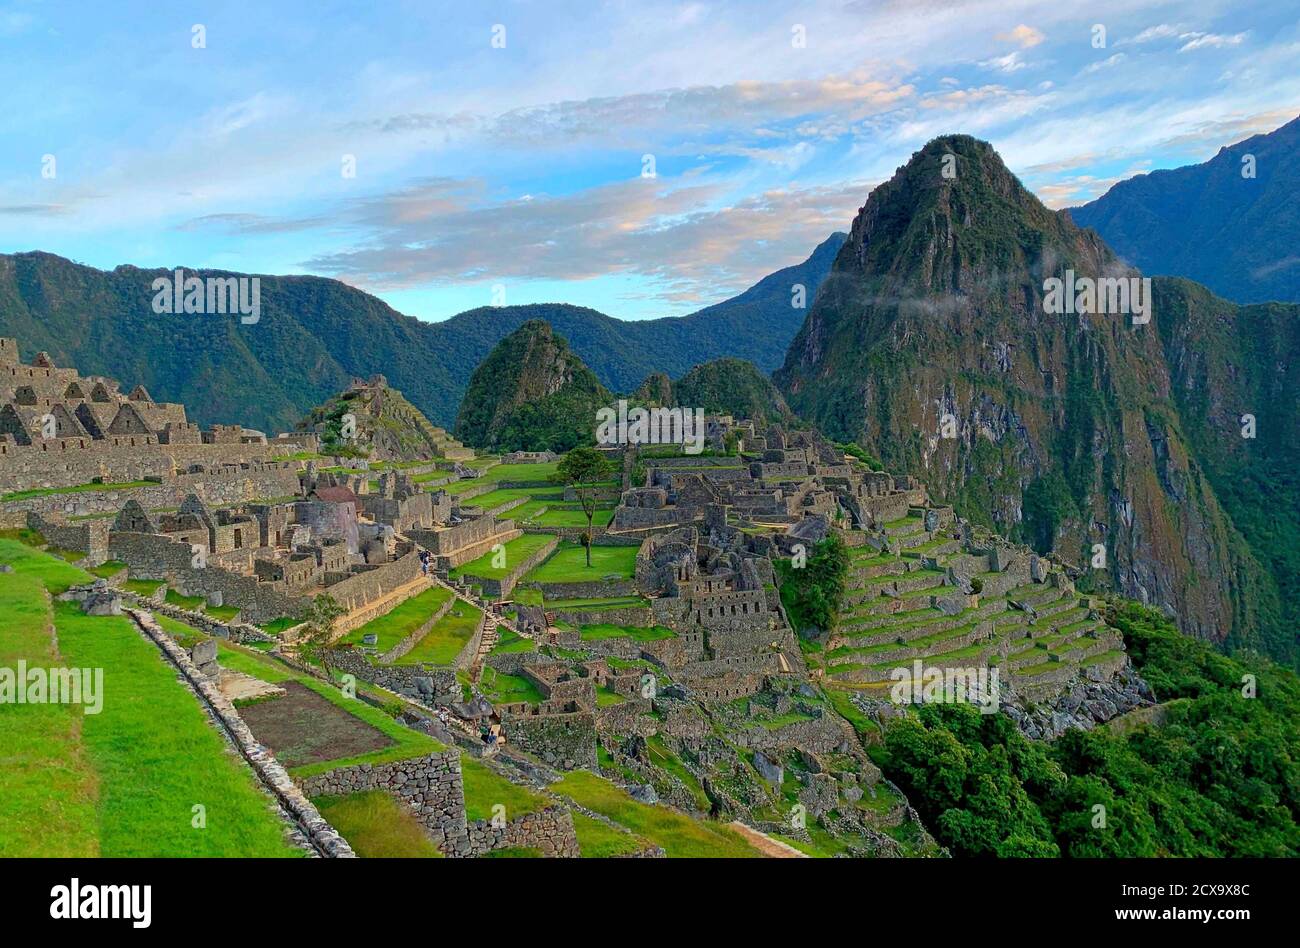 Panorama Machu Picchu, Peru. Berühmte antike Stadt des Inka-Reiches. Atemberaubende architektur der inkas. Grüne Terrassen. Blick auf den Berg Huayna Picchu. Anden. Stockfoto